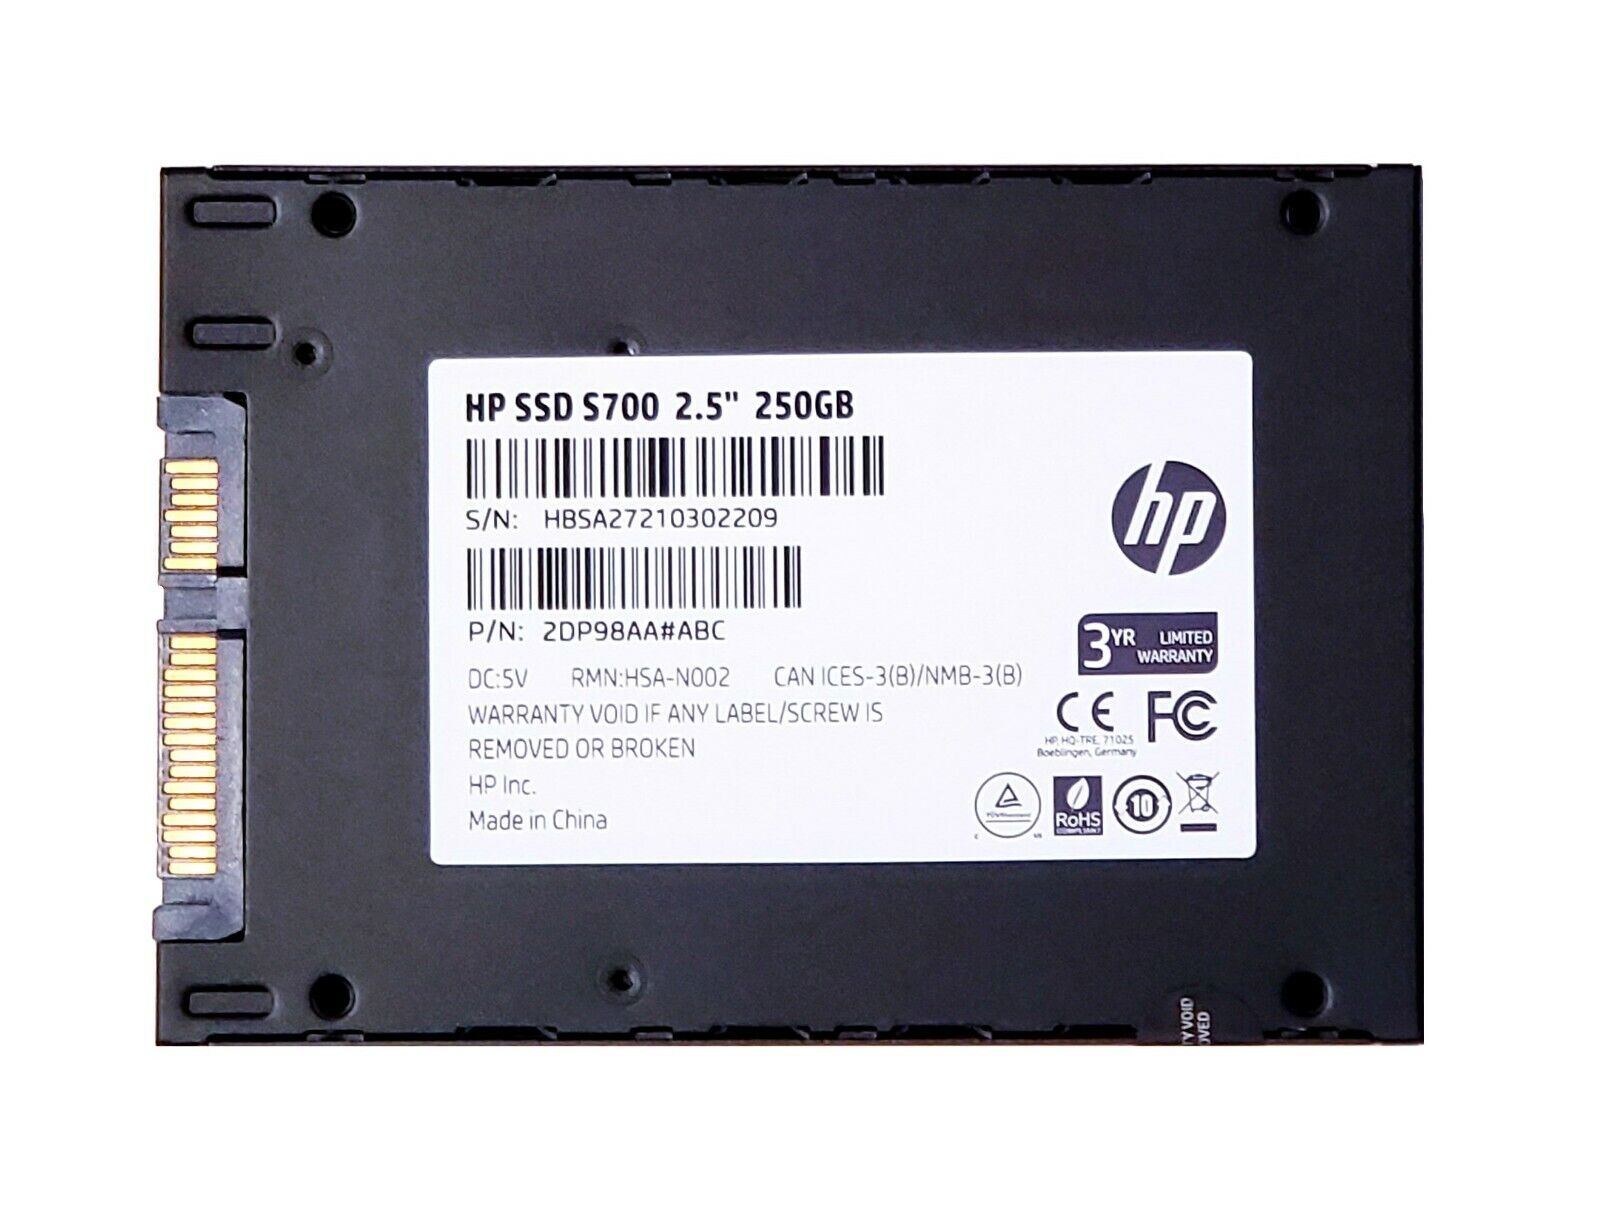 HP 250GB S700 SERIES 2.5